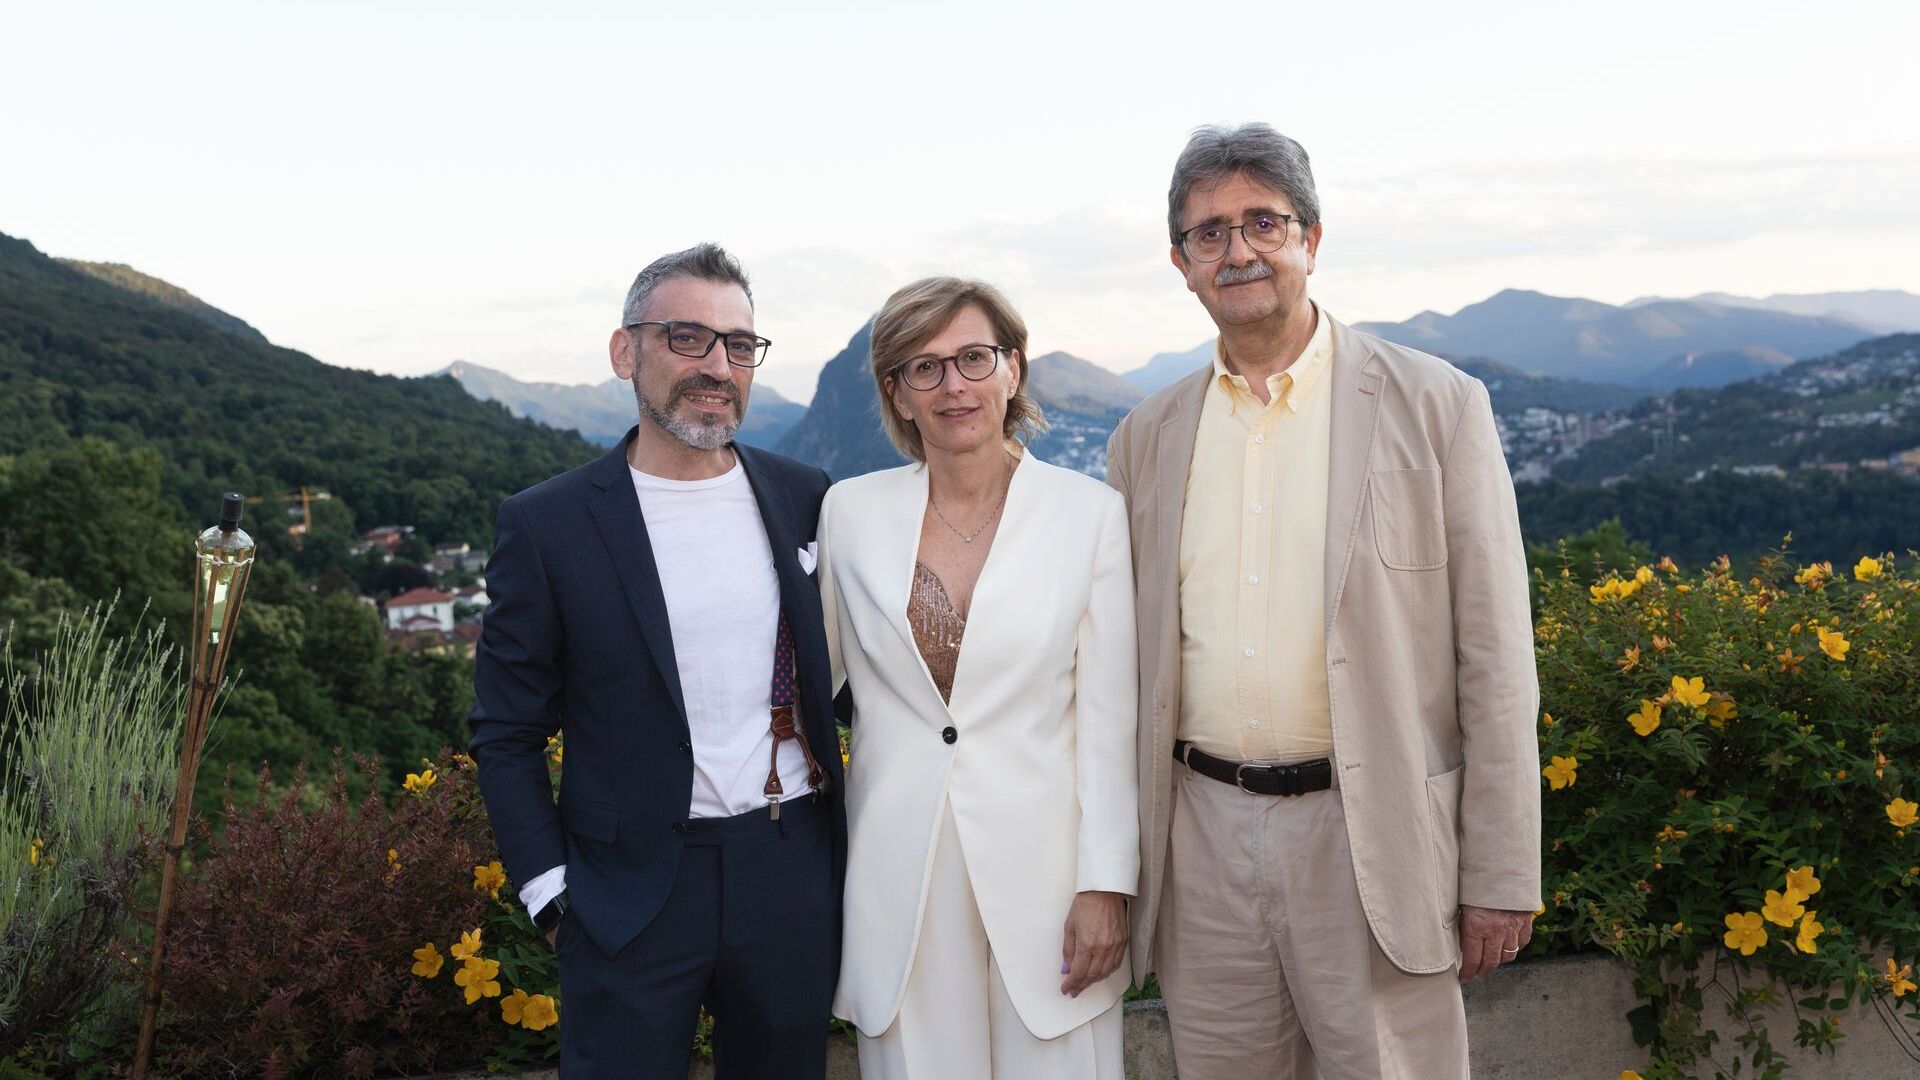 Luca Mauriello i Cristina Giotto, odpowiednio wiceprezes i prezes ated-ICT Ticino, wraz z partnerem Silvano Marioni